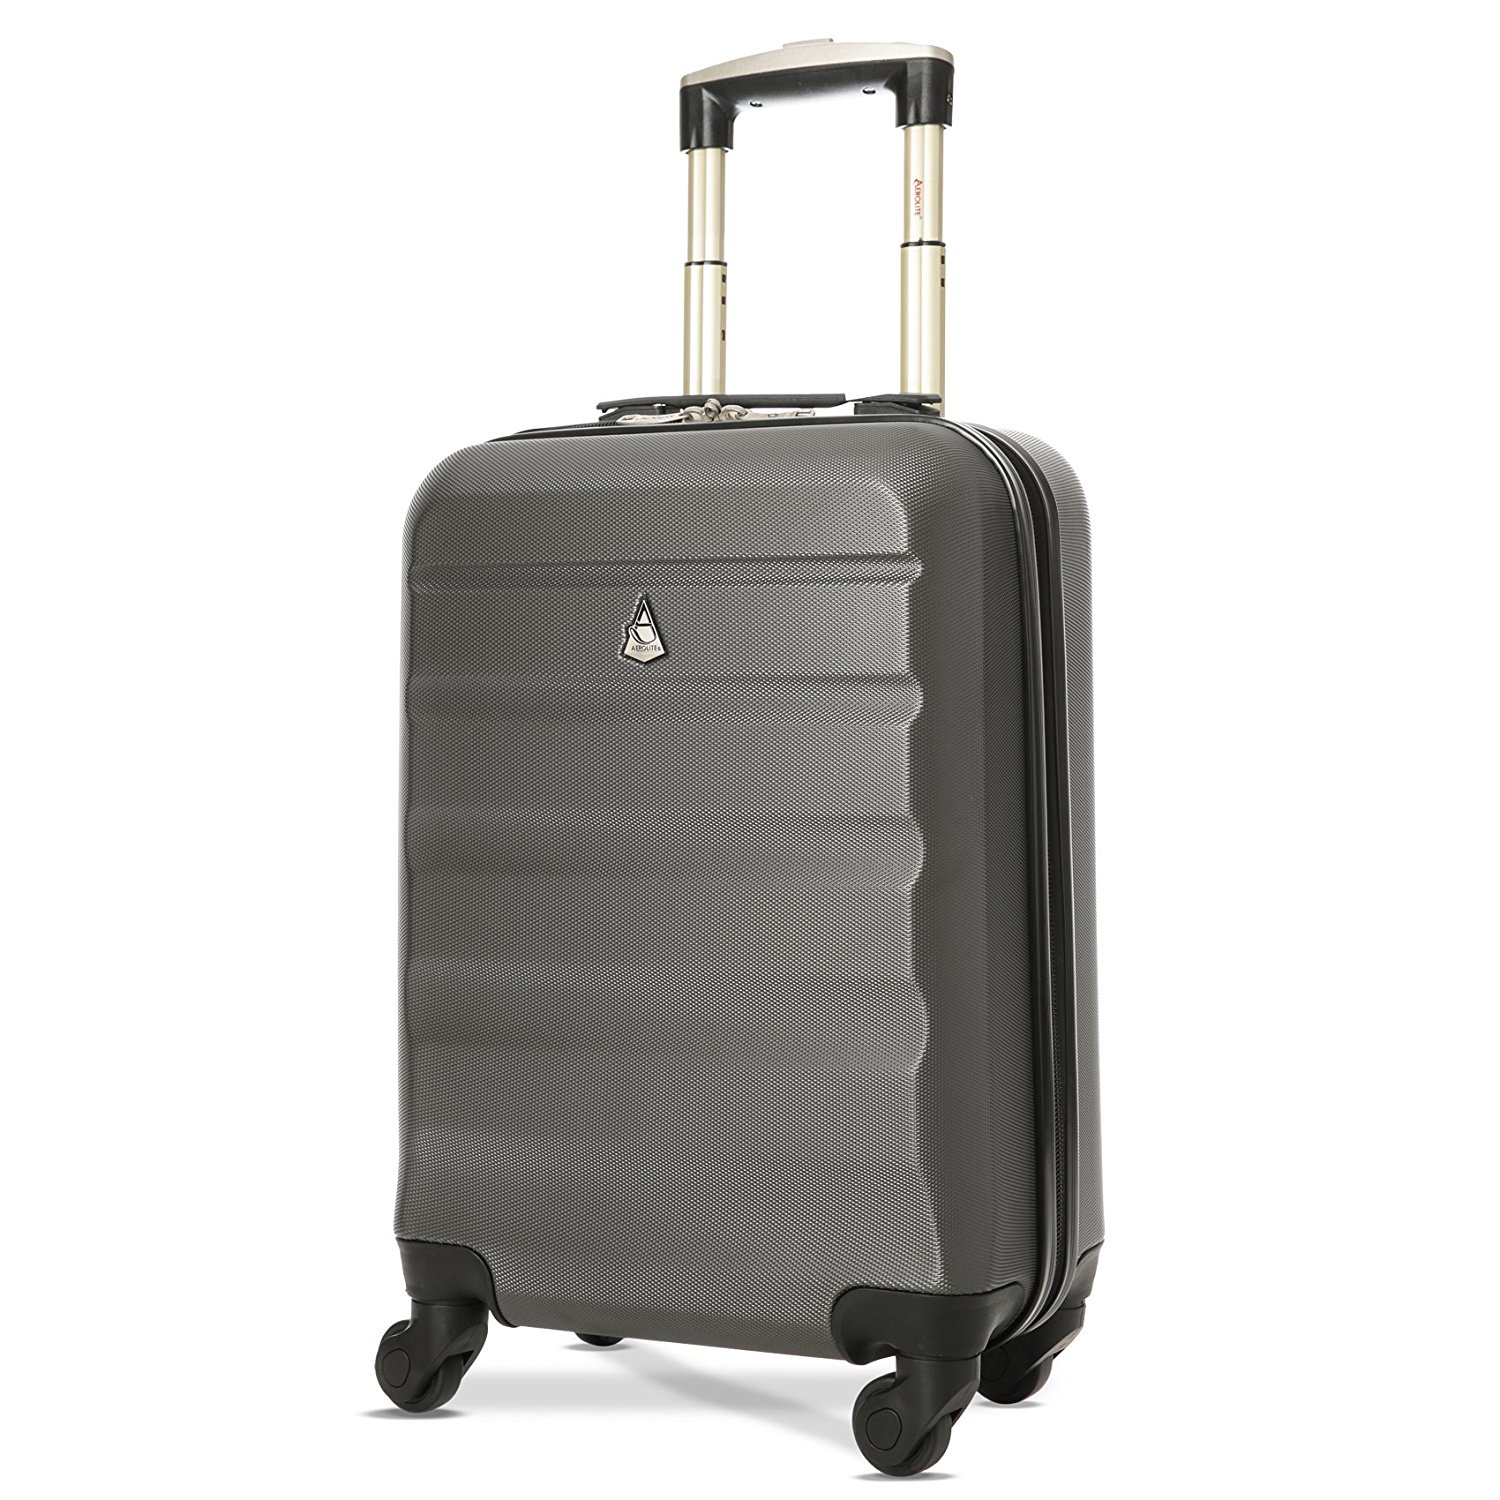 Win an Aerolite Cabin Luggage Case! | | www.neverfullmm.com